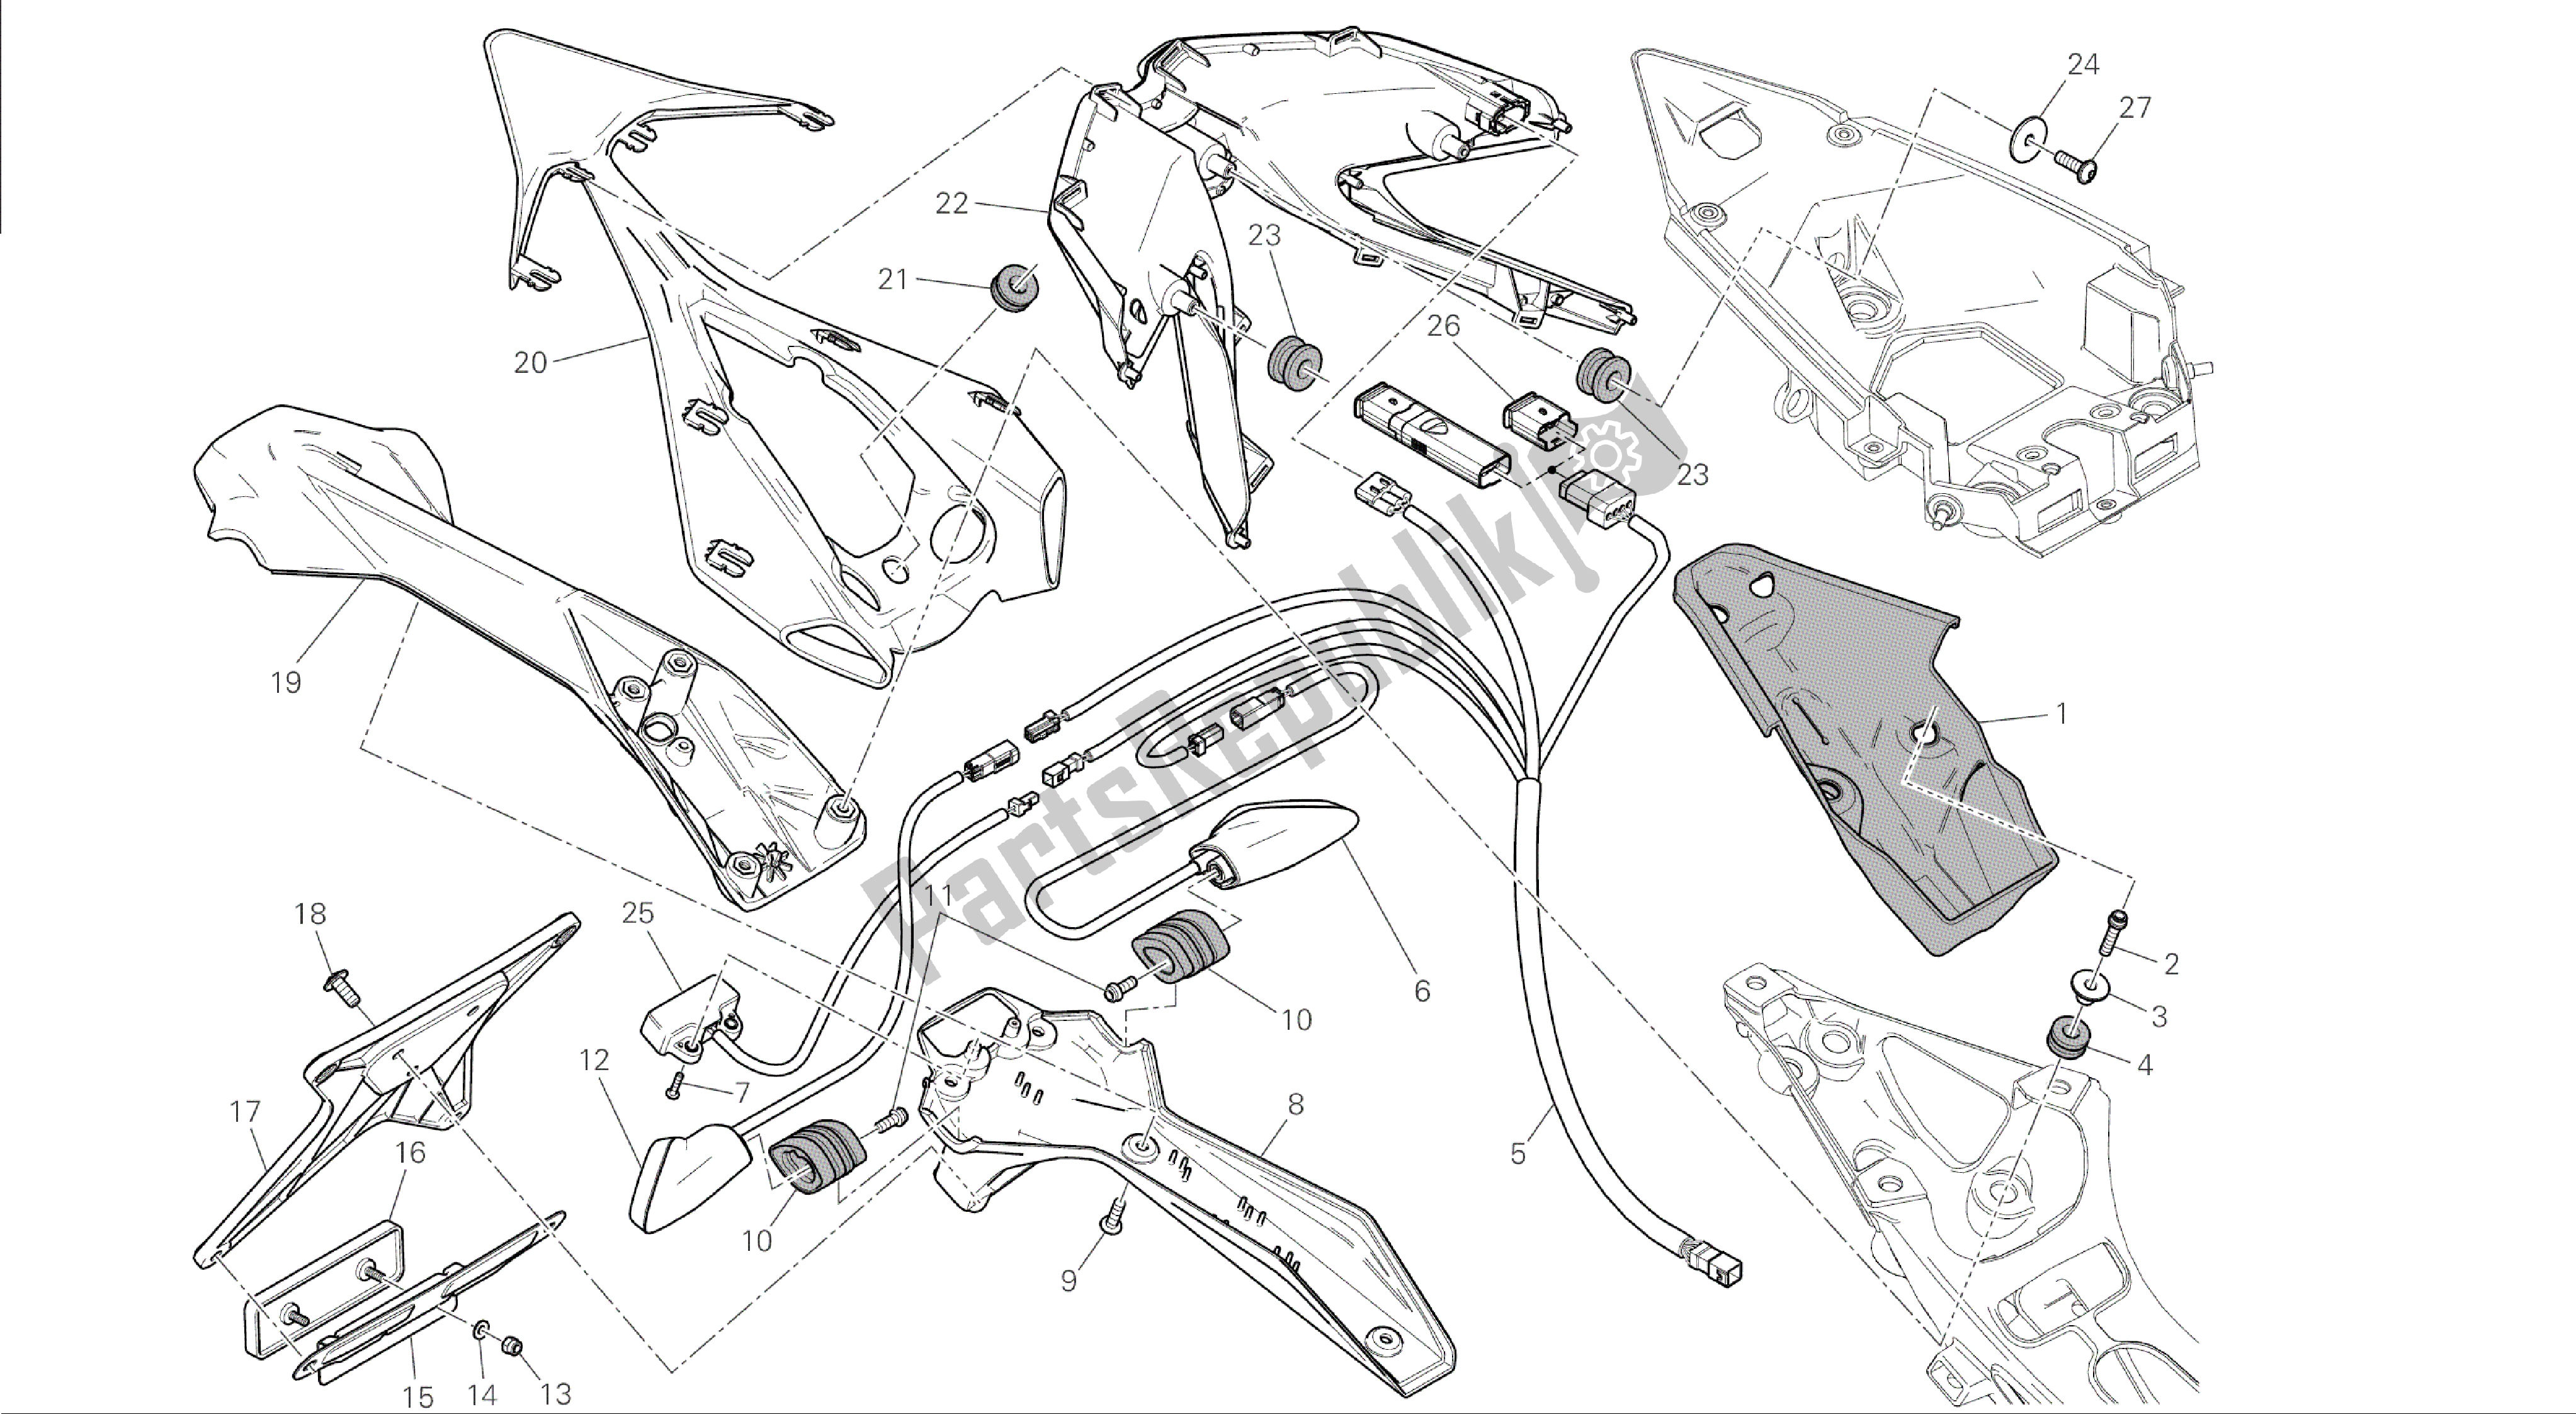 Todas las partes para Dibujo 27a - Soporte De Matrícula - Luz Trasera [mod: 1199abs; Xst: Marco De Grupo Sujetador, Chn, Eur, Fra, Jap] de Ducati Panigale ABS 1199 2014